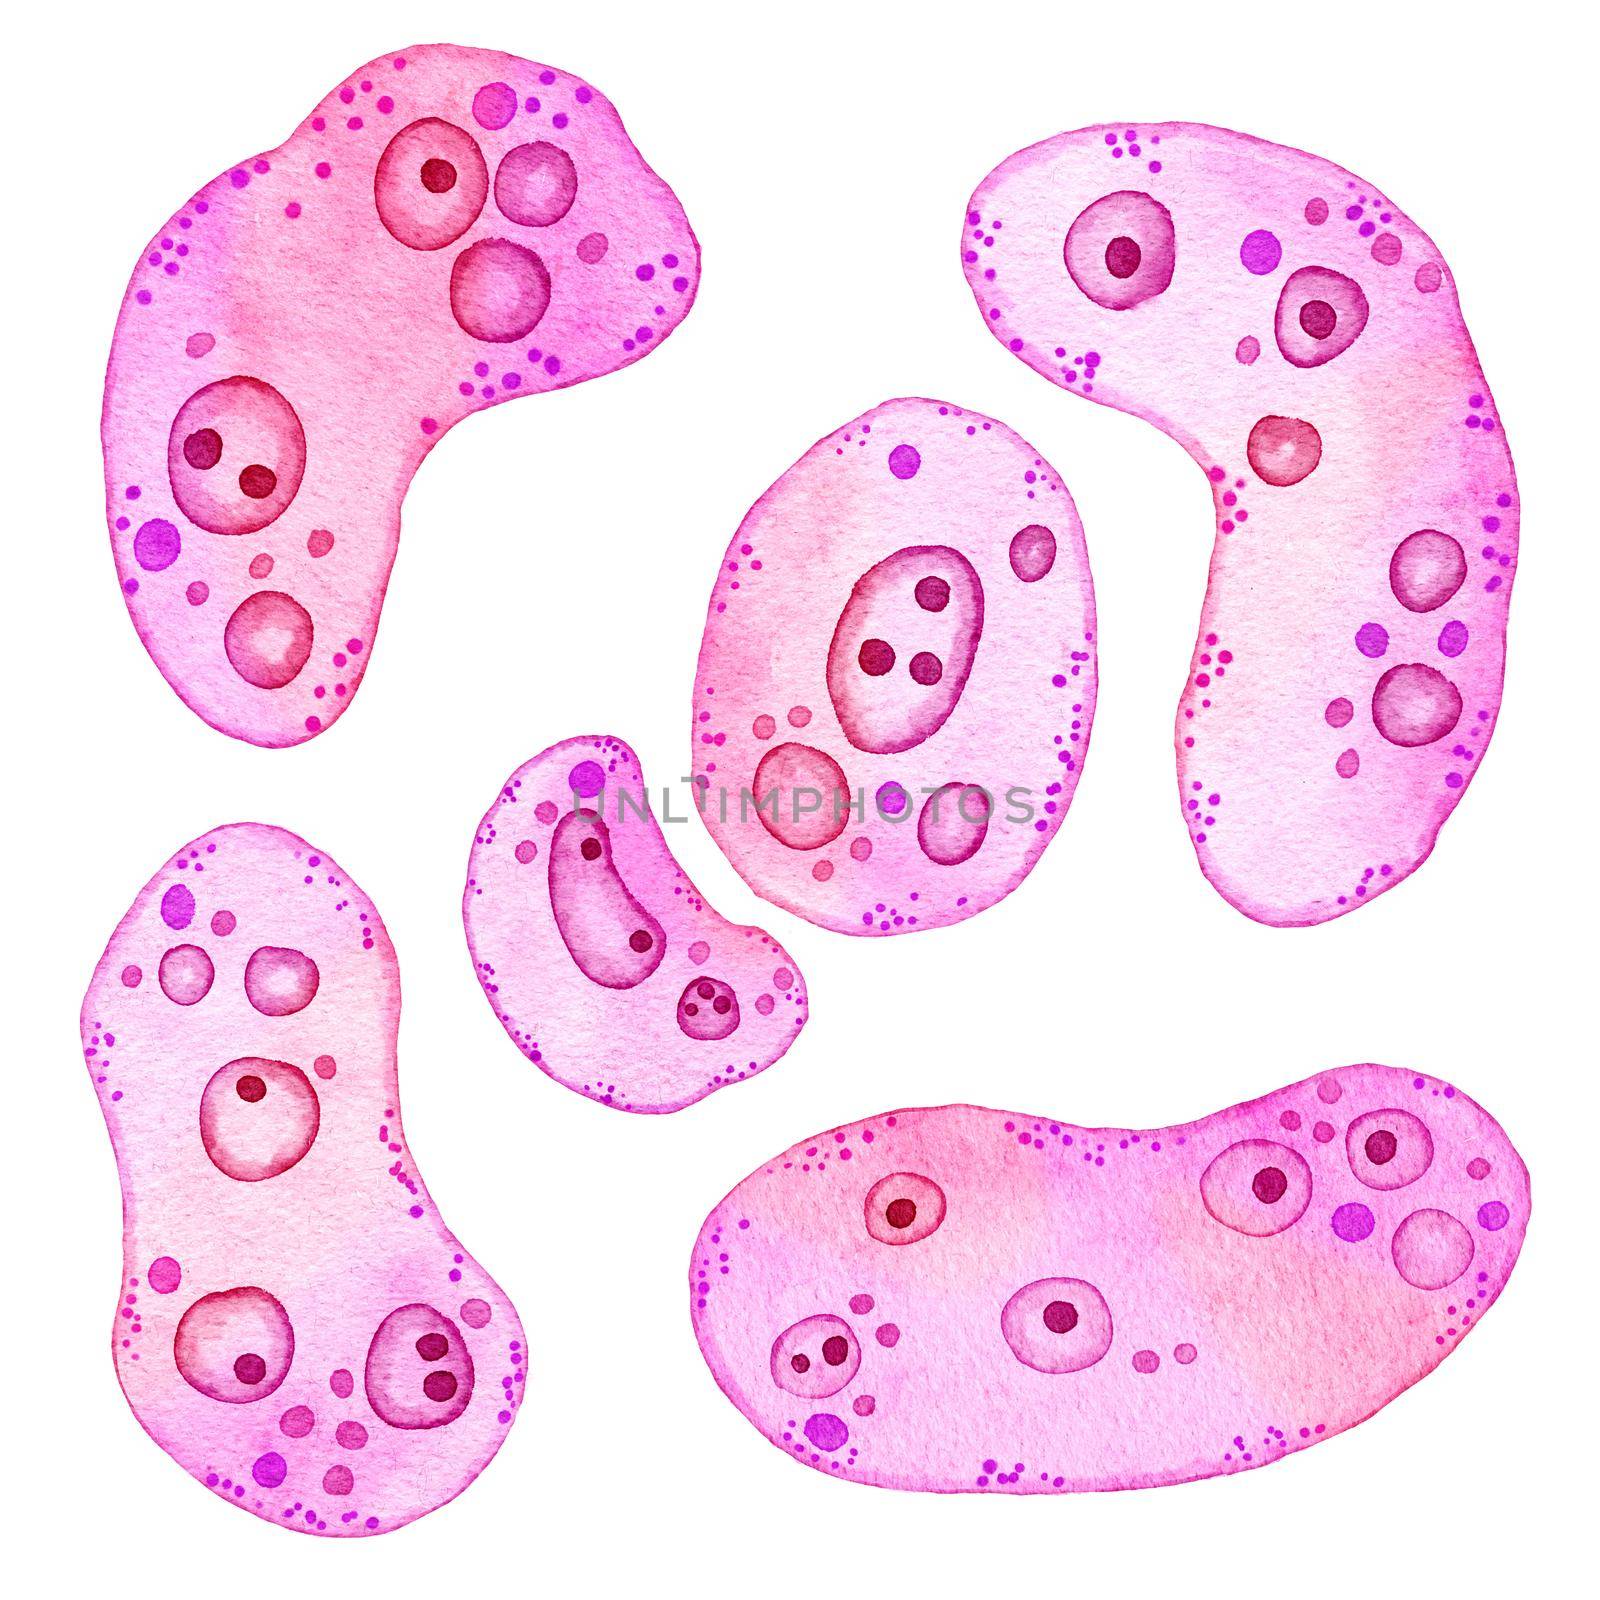 Watercolor illustration of pink purple cells microalgae microorganisms, microscope bio algae. Concept for cosmetics medicine healthcare print design. Pastel ameoba bacteria, soft oval round shape